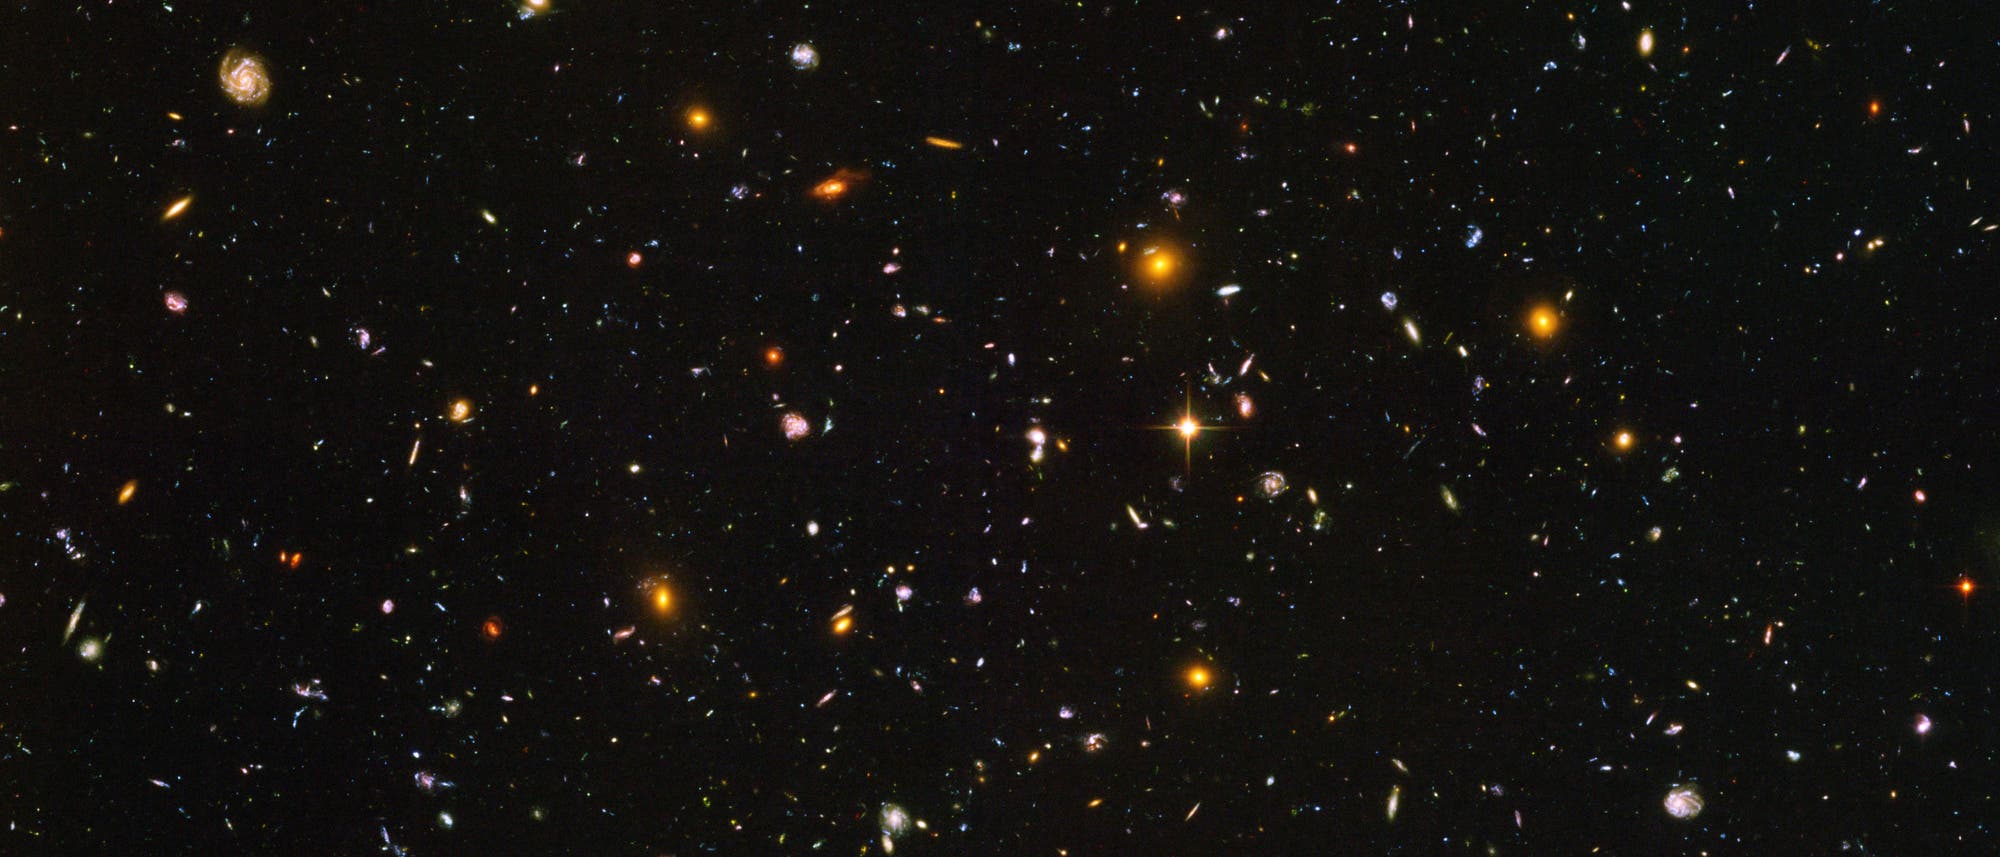 Hubble Ultra Deep Field (HUDF)